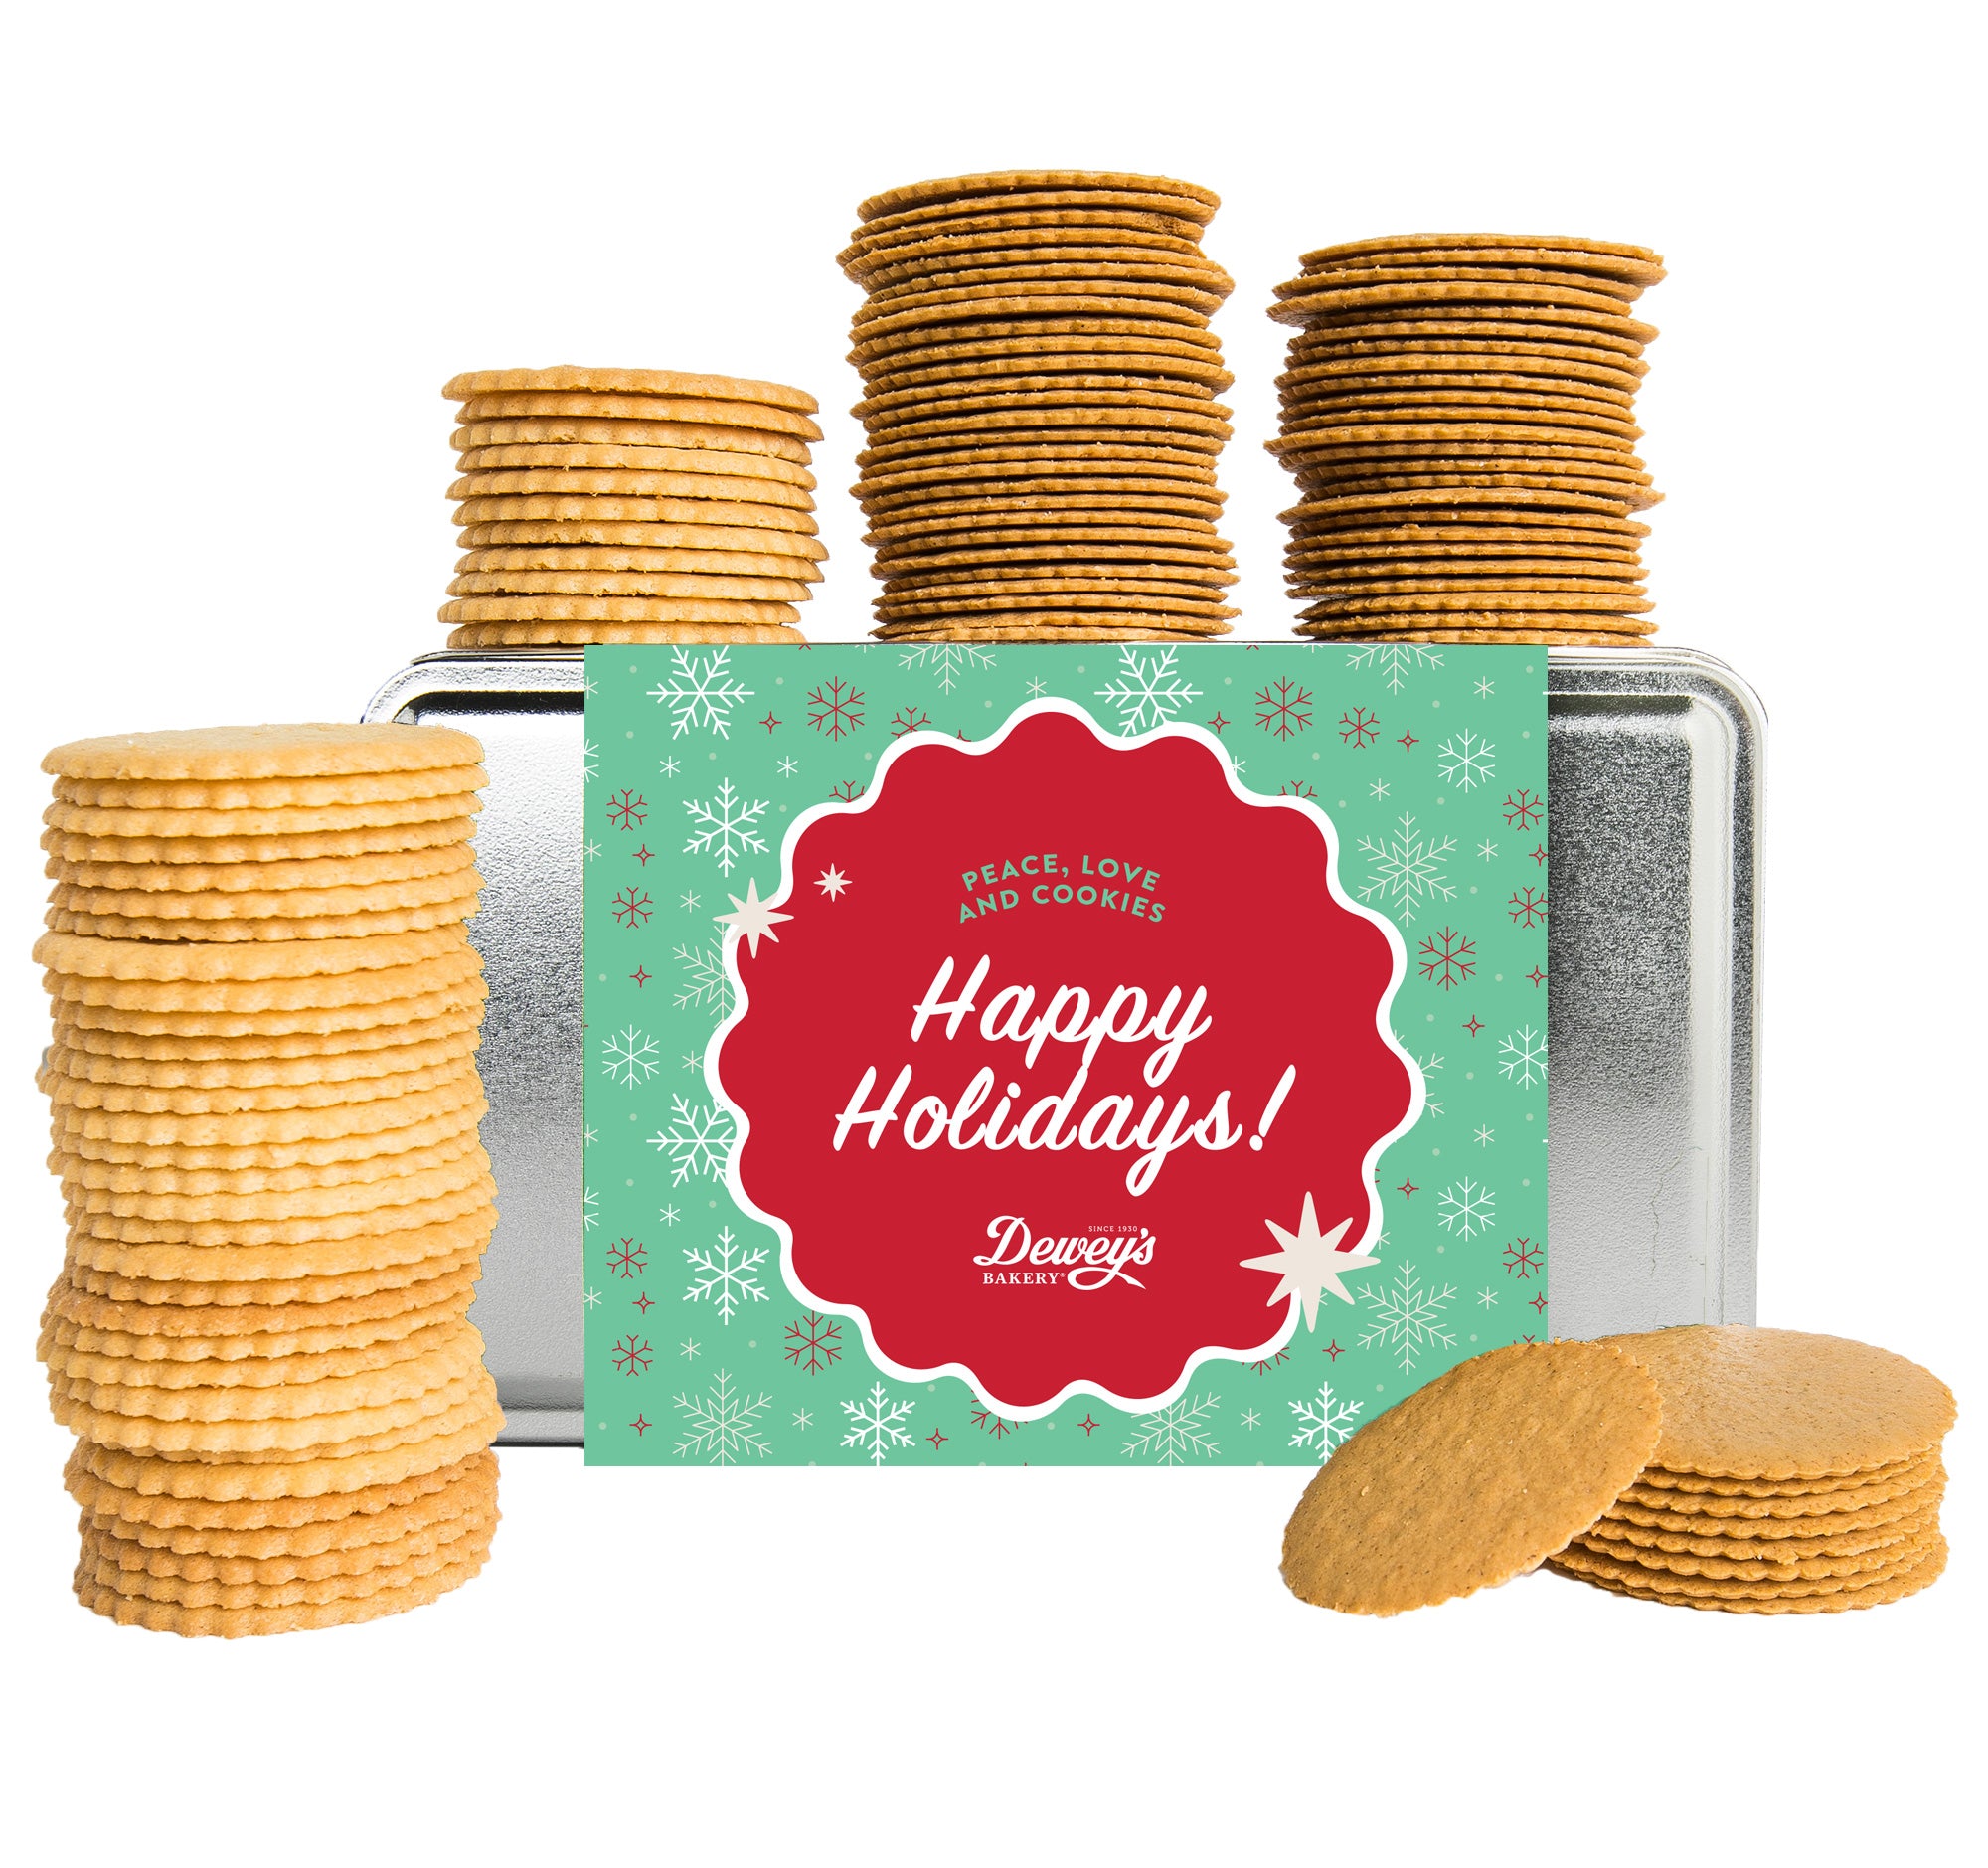 "Happy Holidays" Sugar & Spice Gift Tin